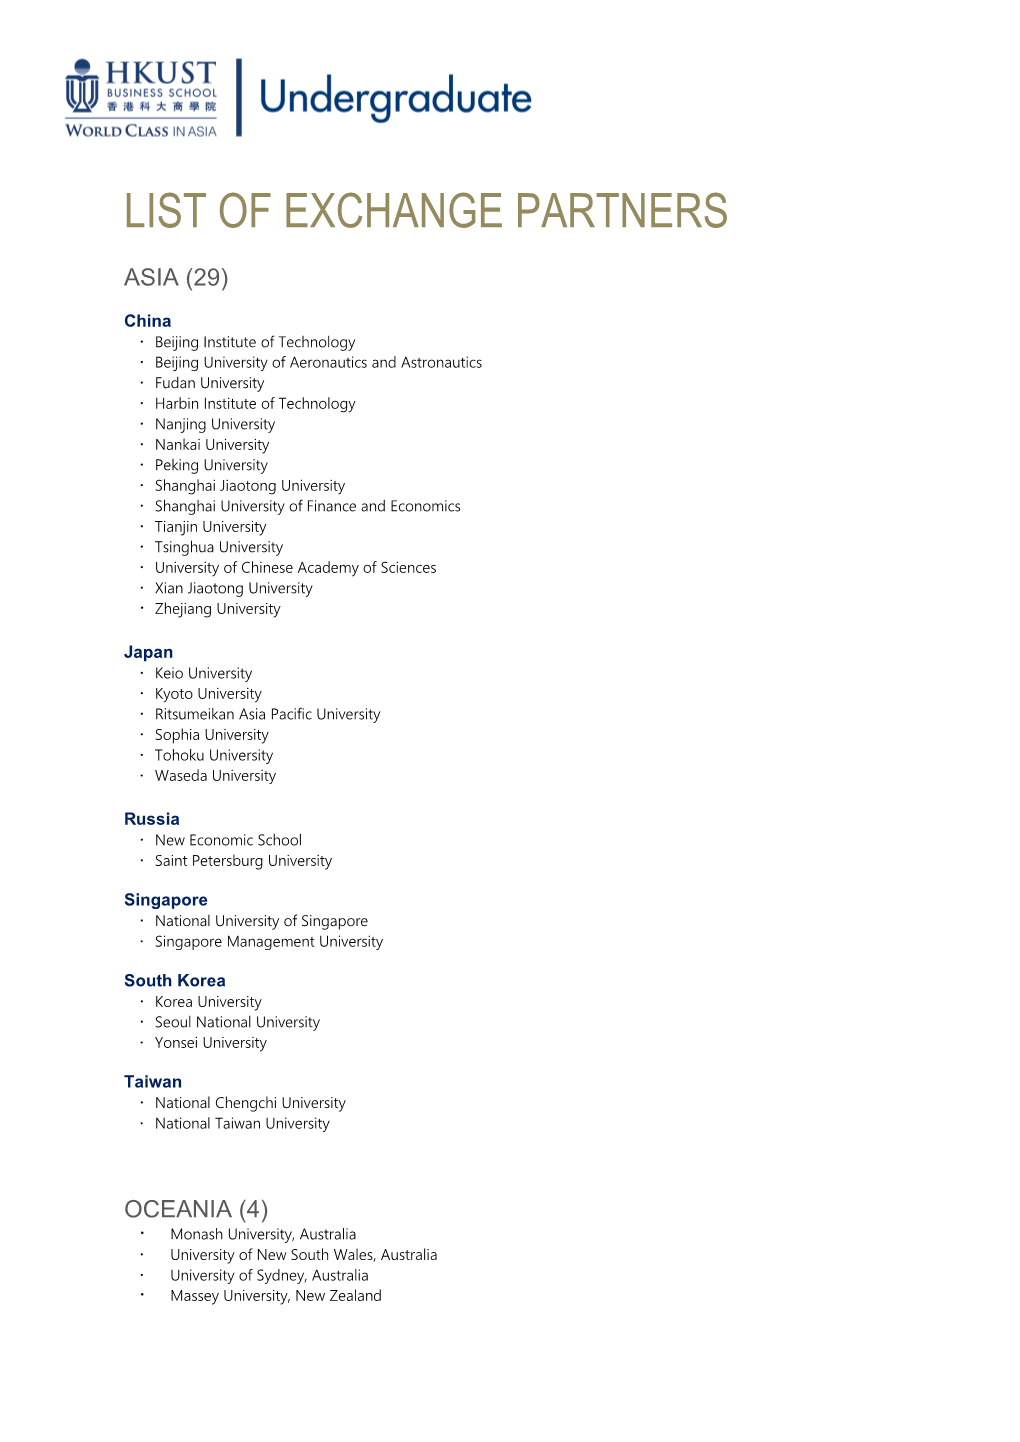 List of Exchange Partners